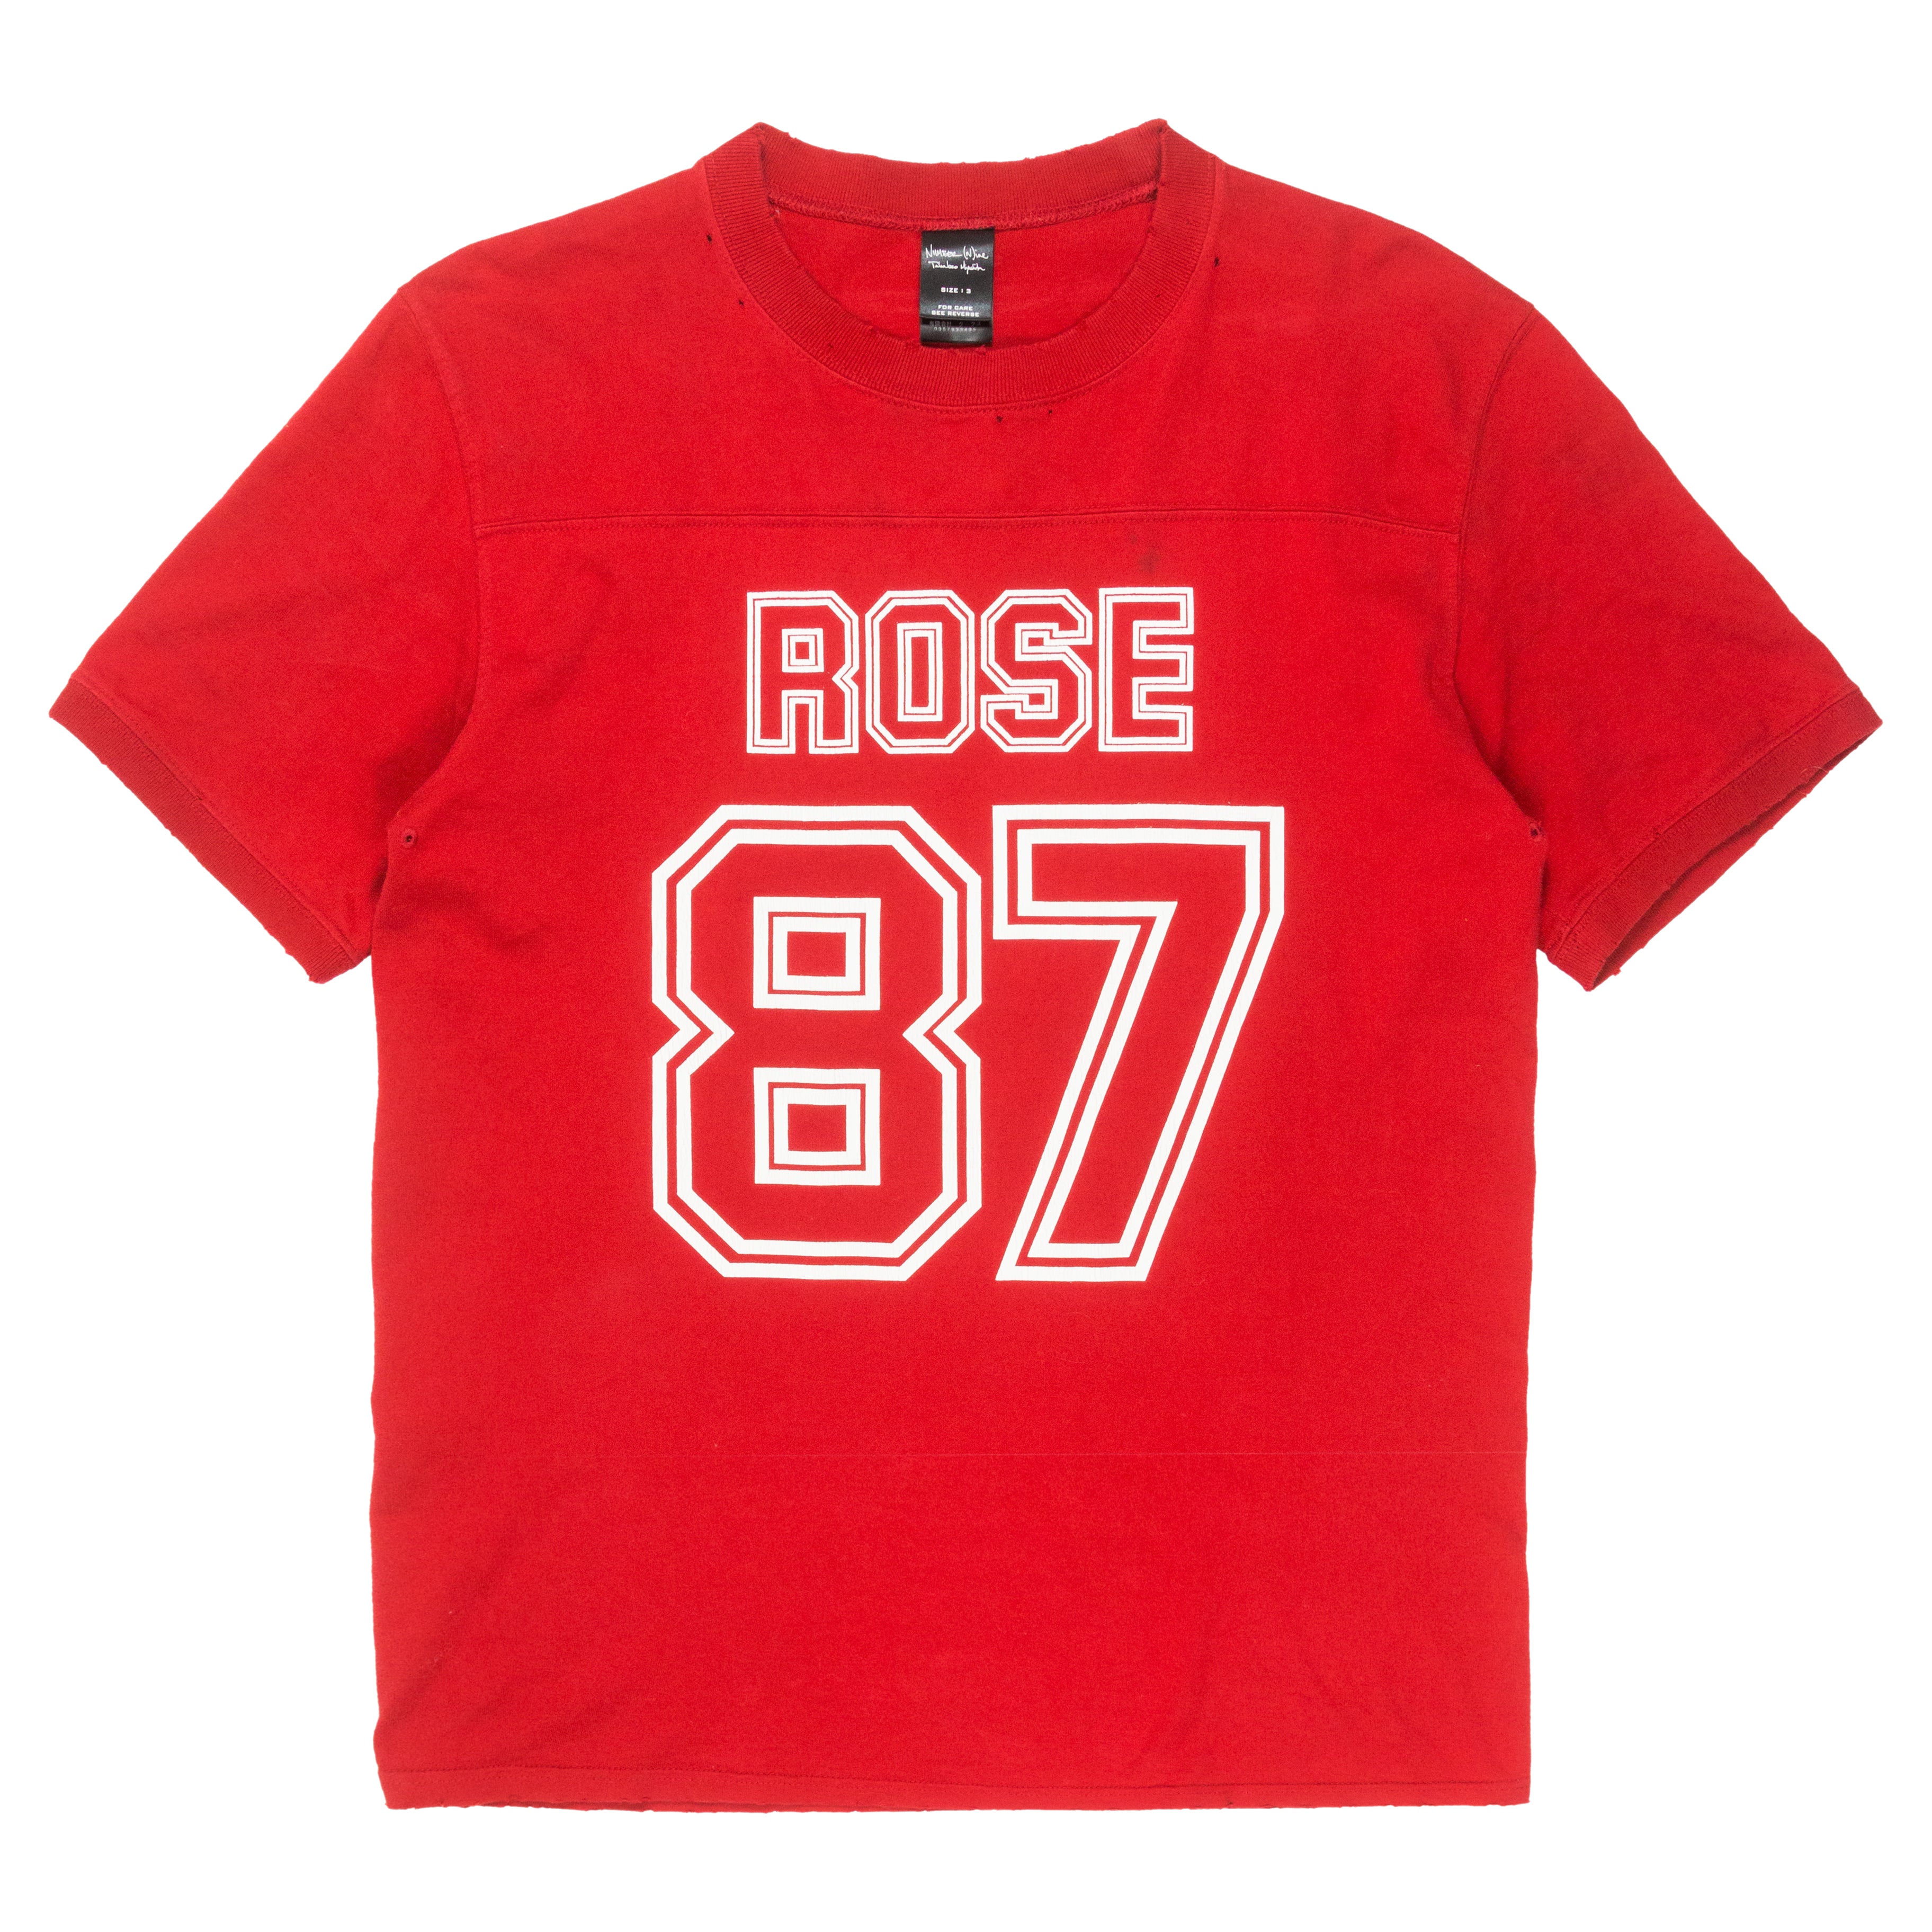 NUMBER (N)ine フットボールシャツ Tシャツ ROSE 87-